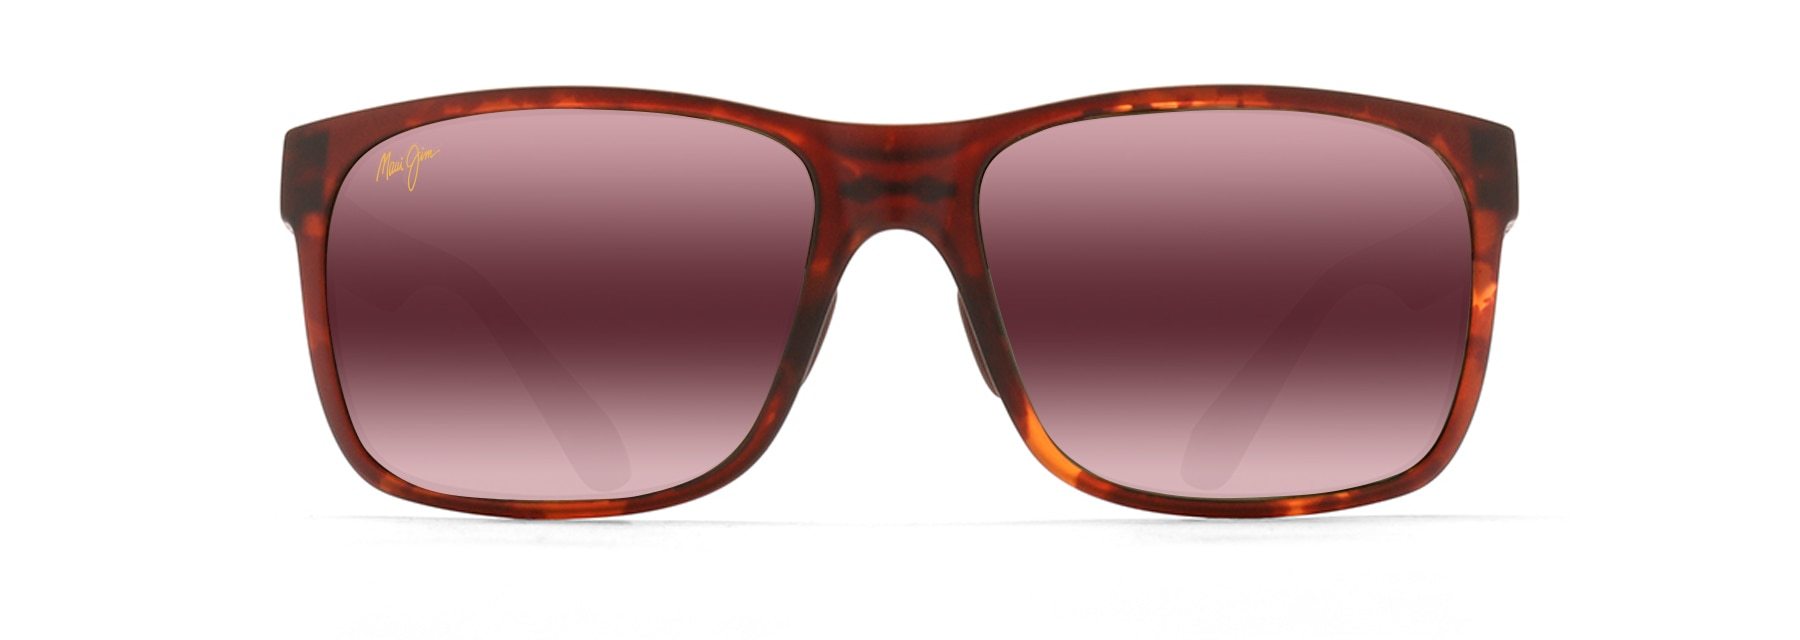 MyMaui Red Sands MM432-007 Sunglasses